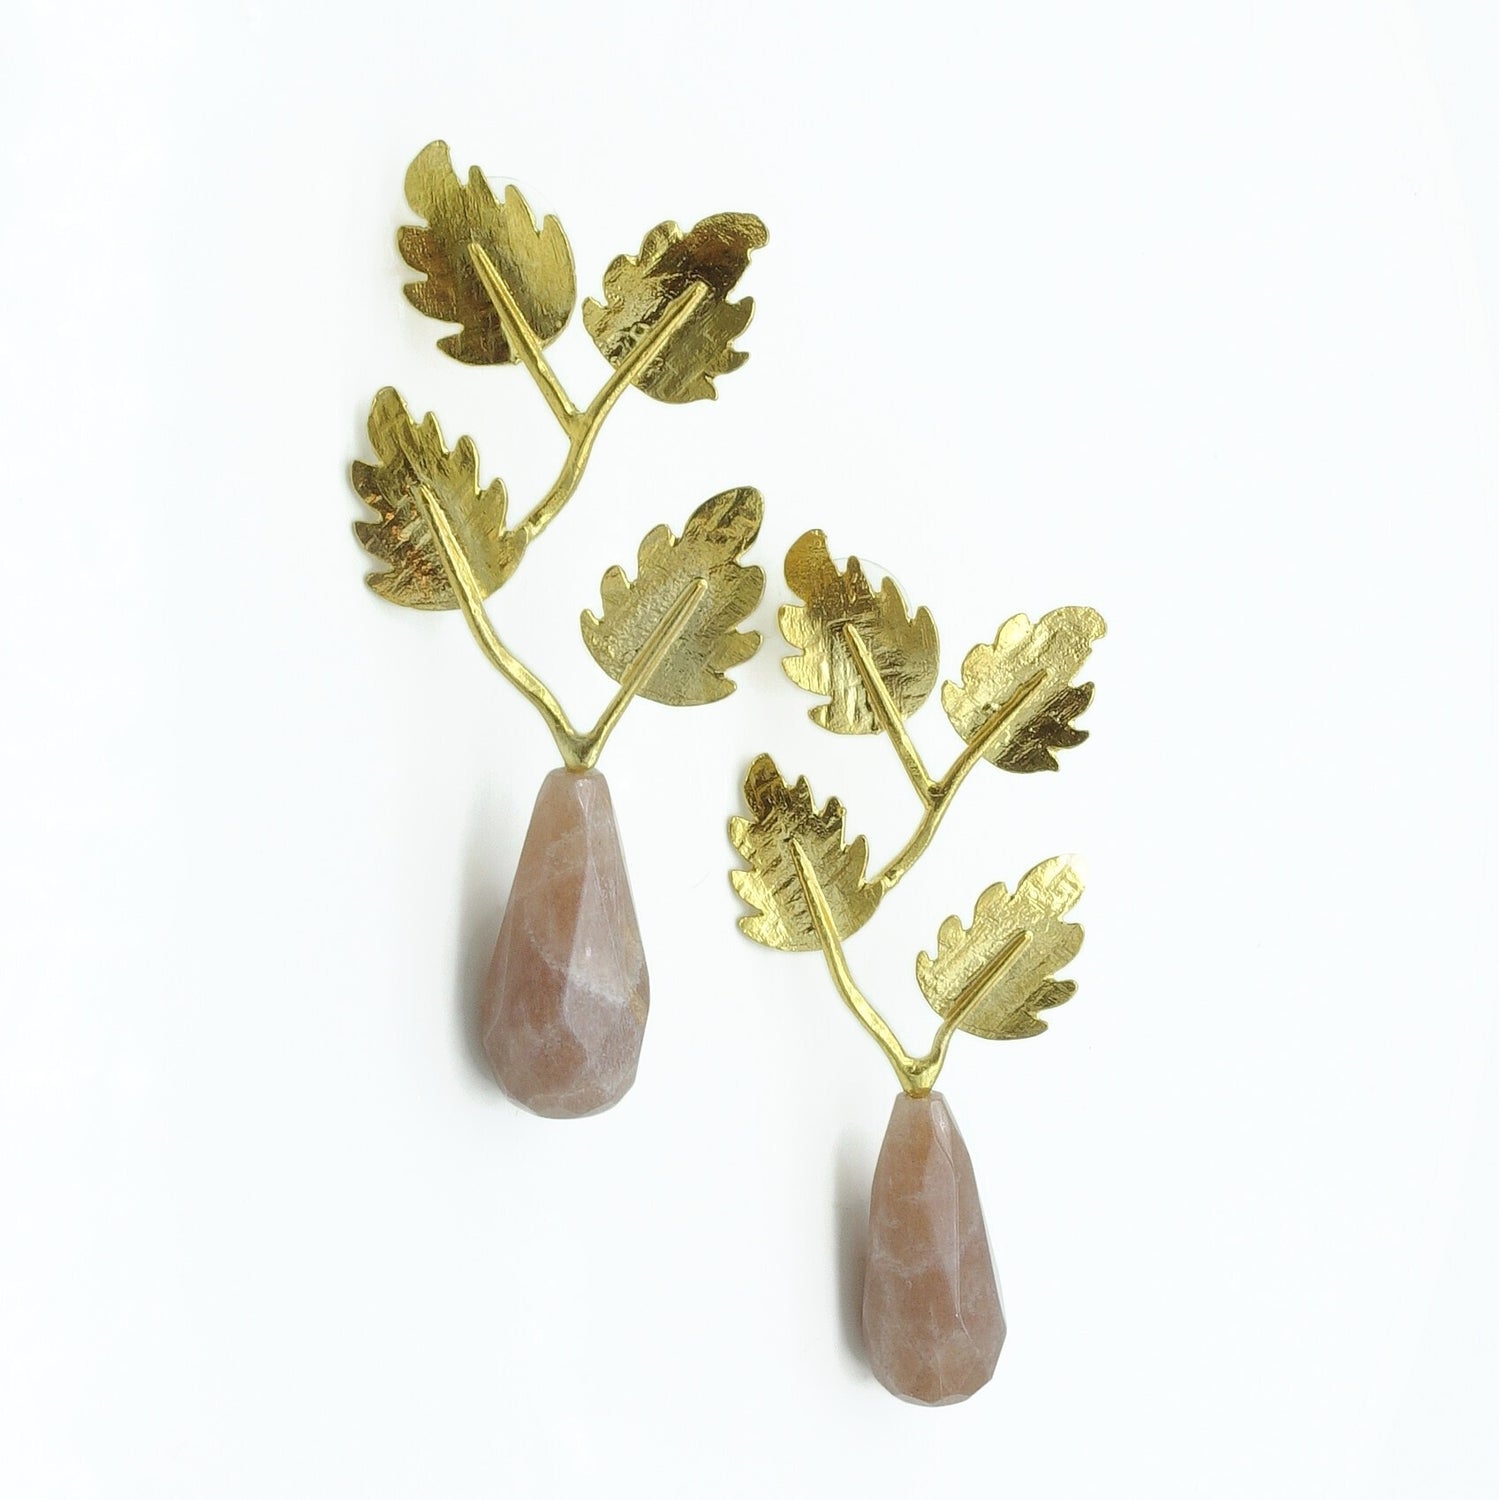 Aylas Agate semi precious gemstone earrings - 21ct Gold plated Handmade